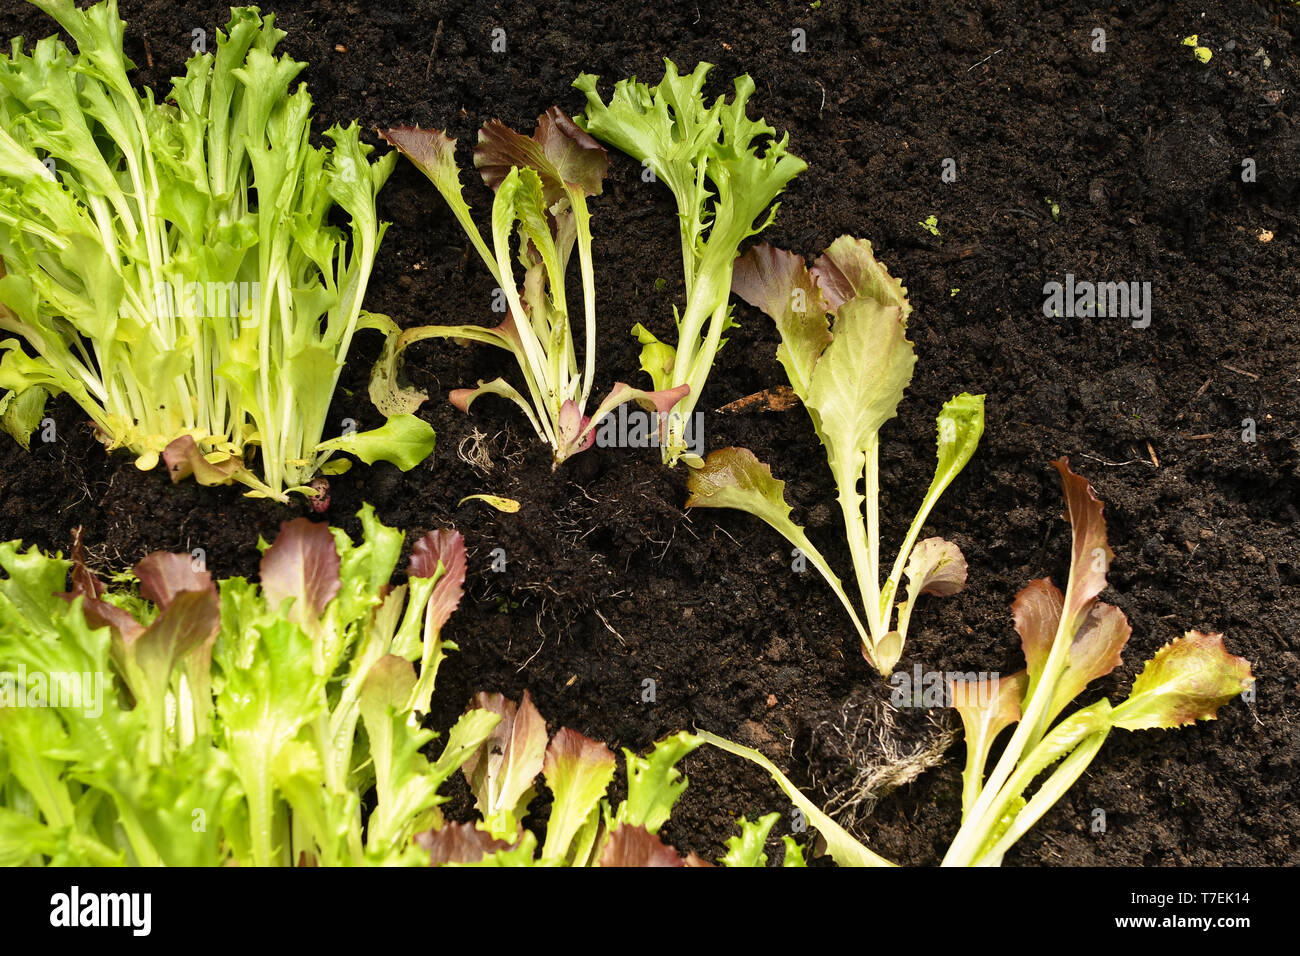 planting living baby lettuce salad into garden - also see images T7EK13 and T7EK11 Stock Photo